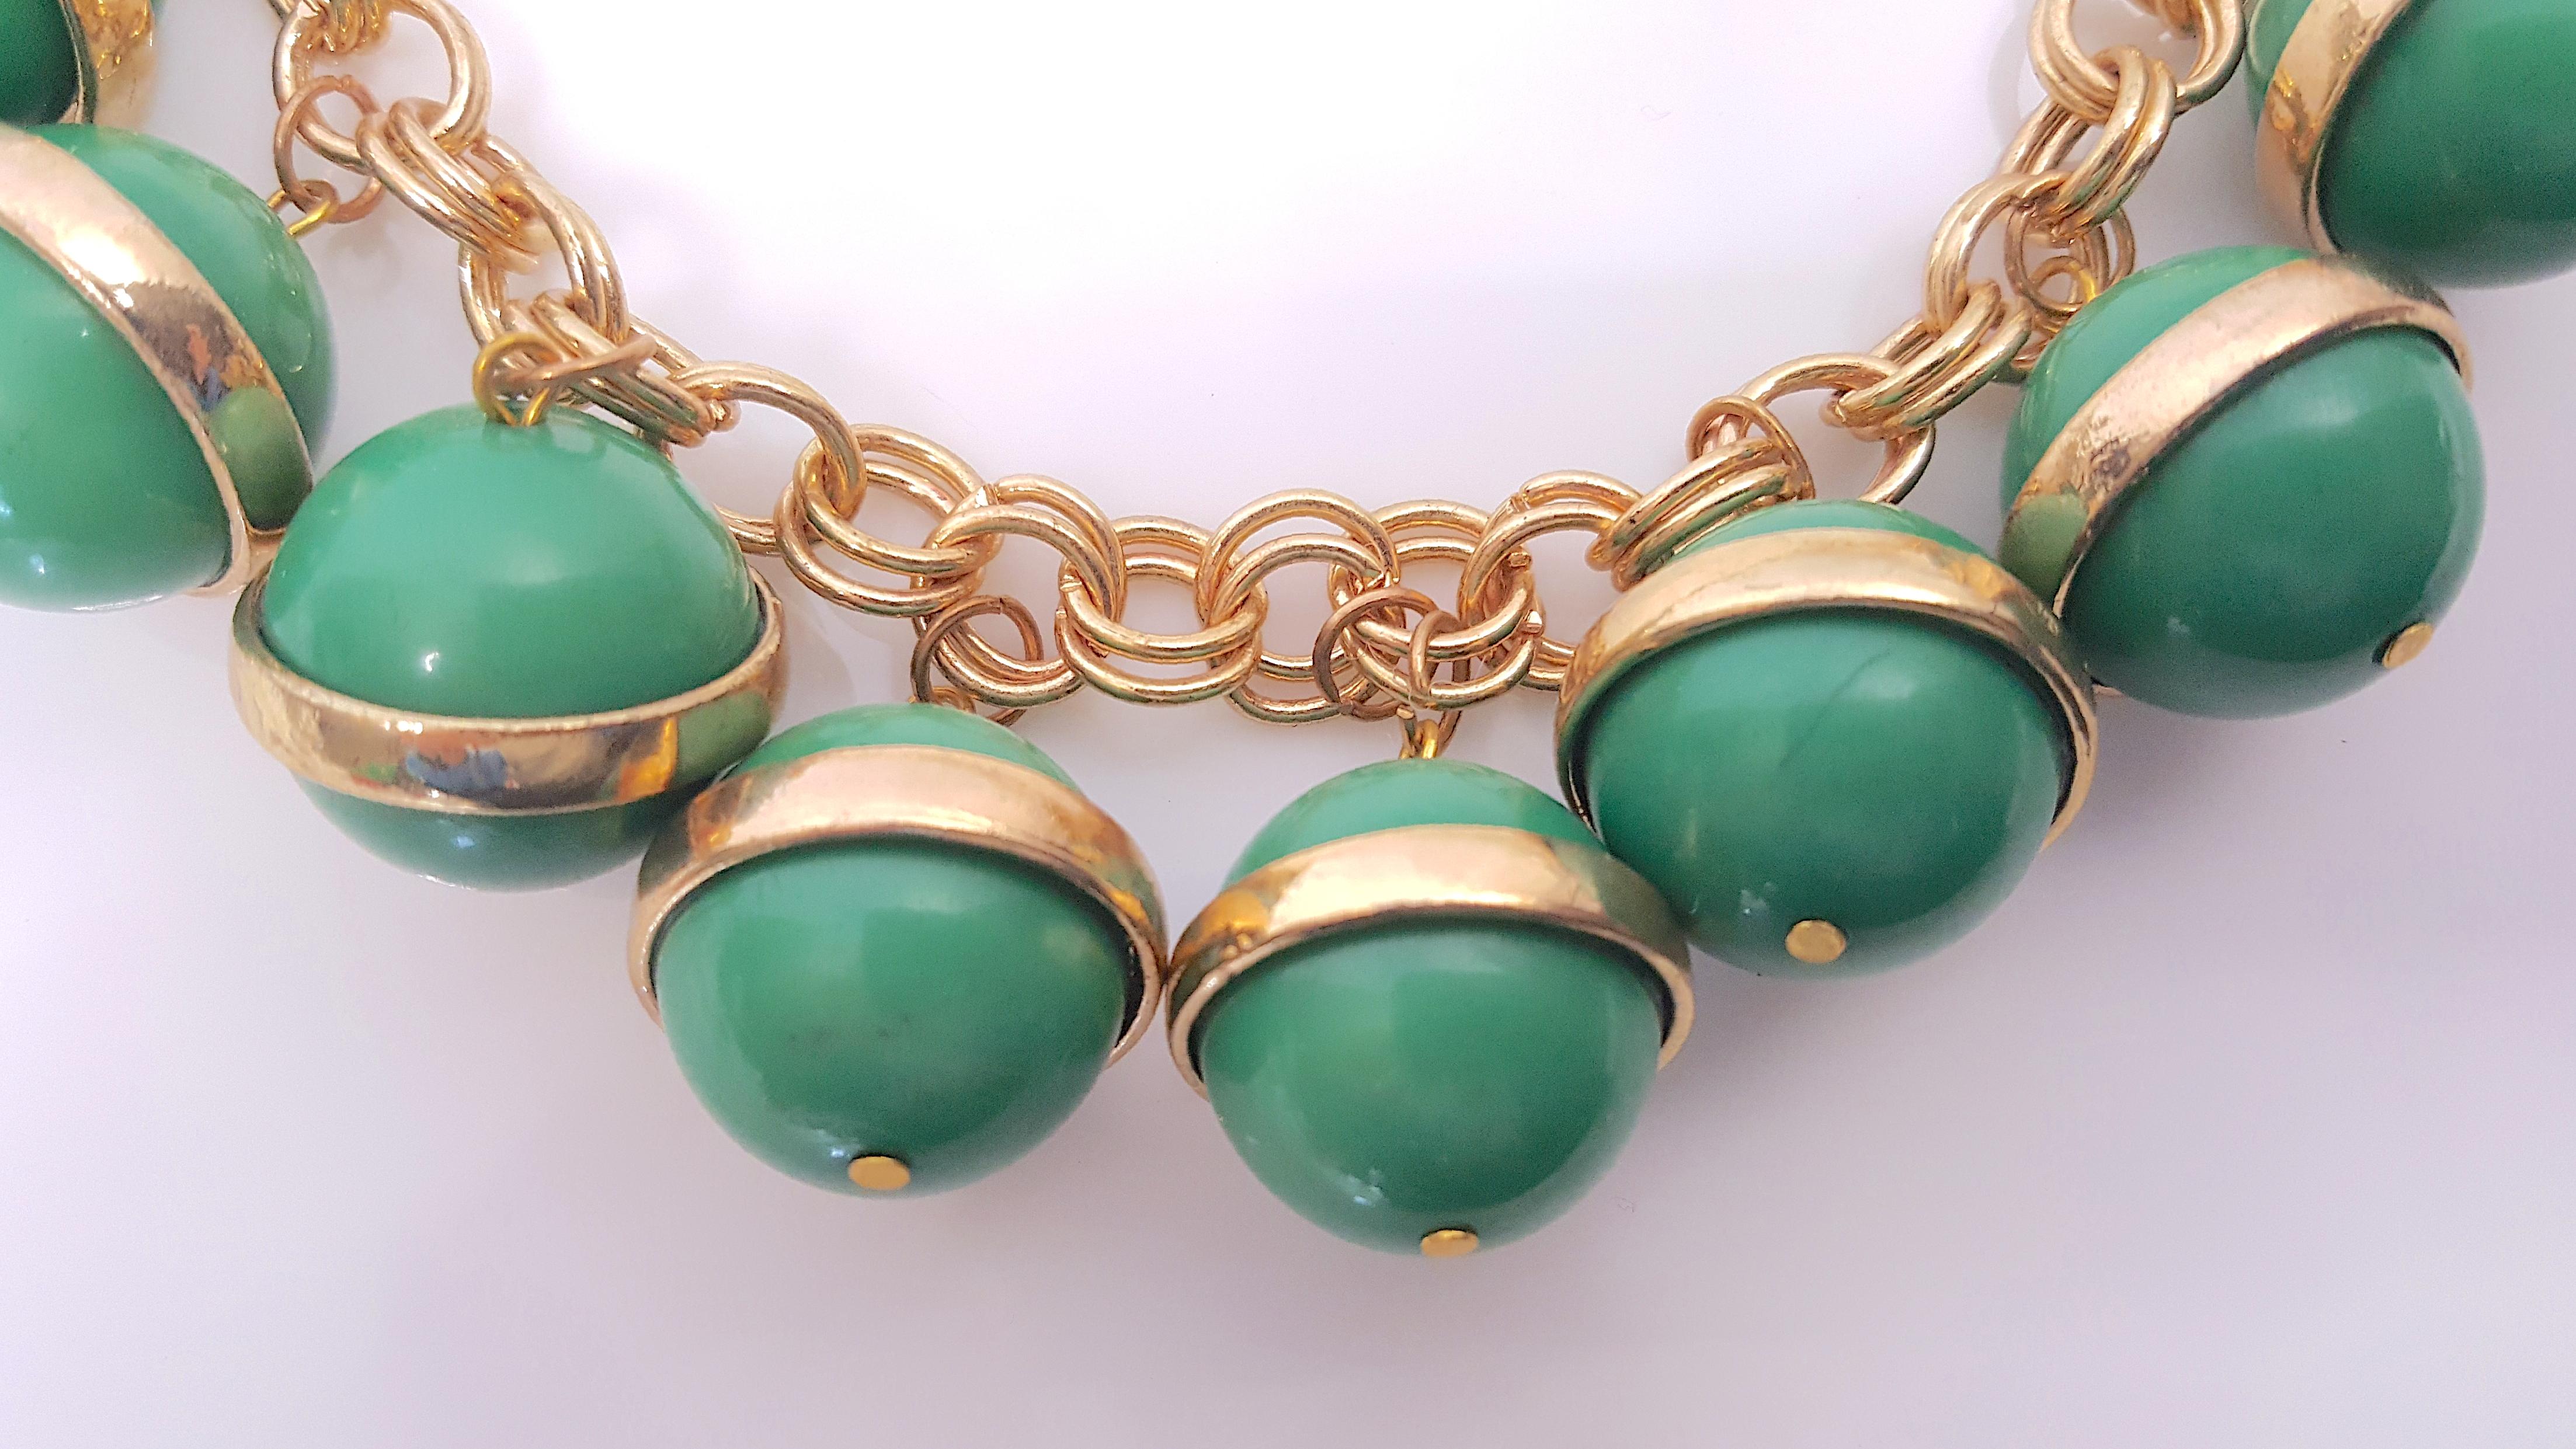 Bakelite 1930s German ArtDeco GoldRinged EmeraldBallPendants ChainLink Necklace For Sale 4